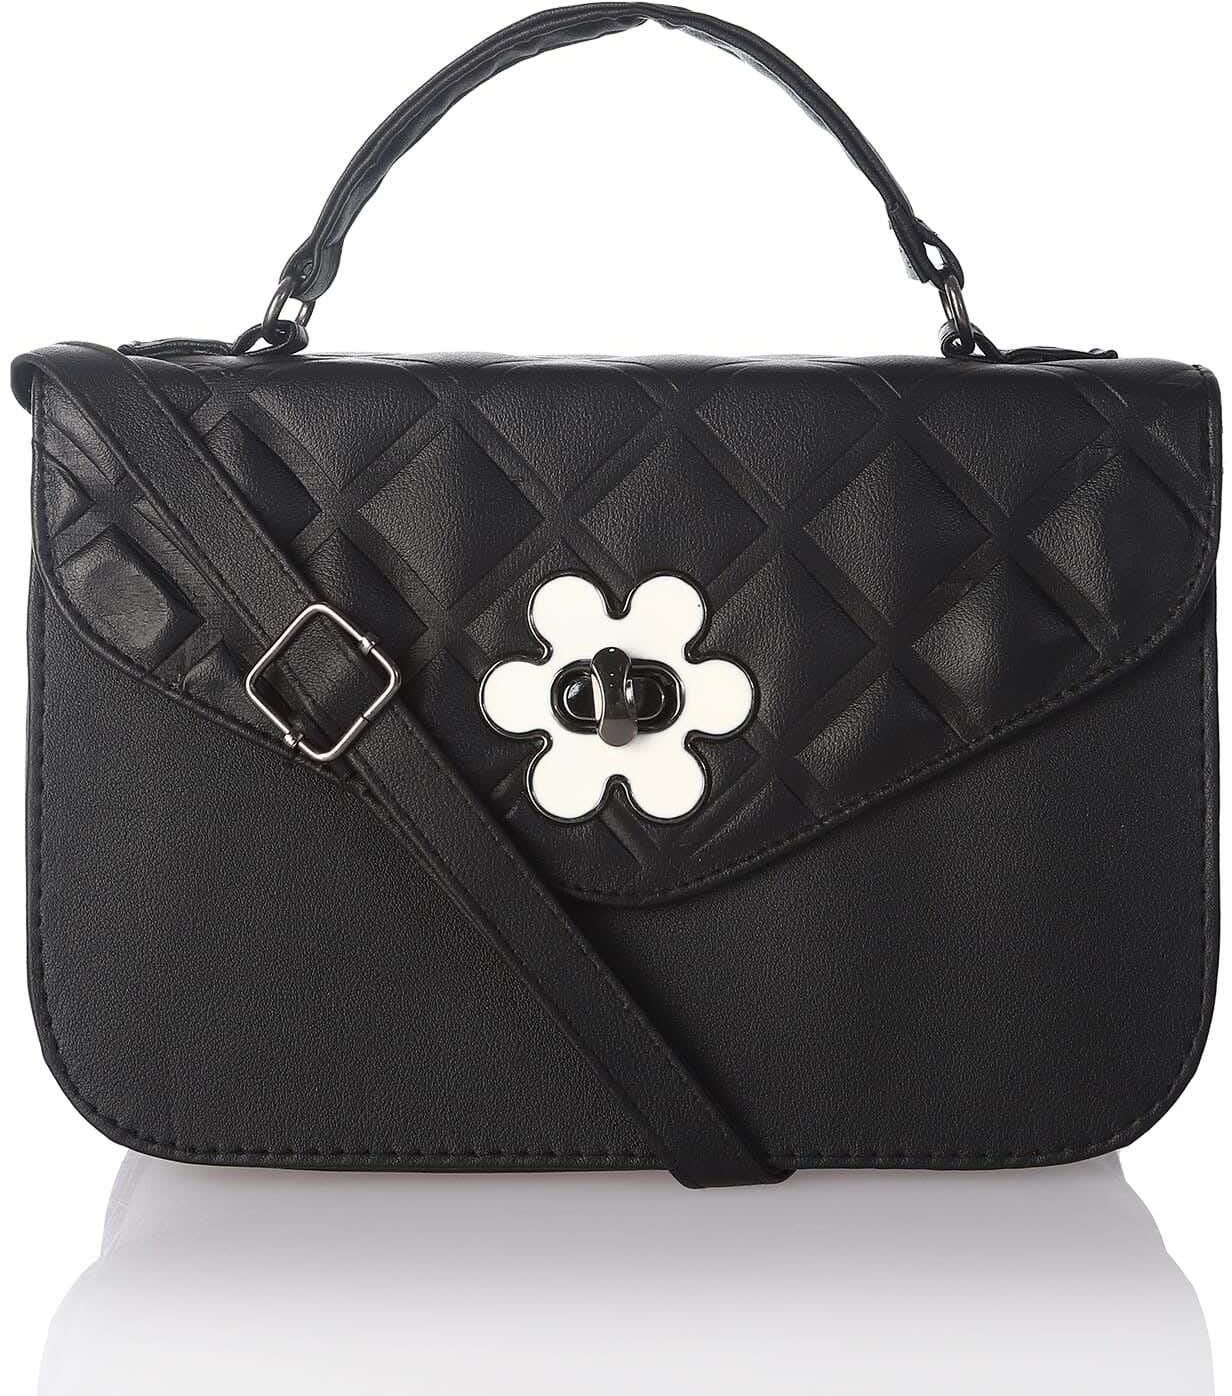 Get Ladies Leather Handbag, 20×15 cm - Black with best offers | Raneen.com